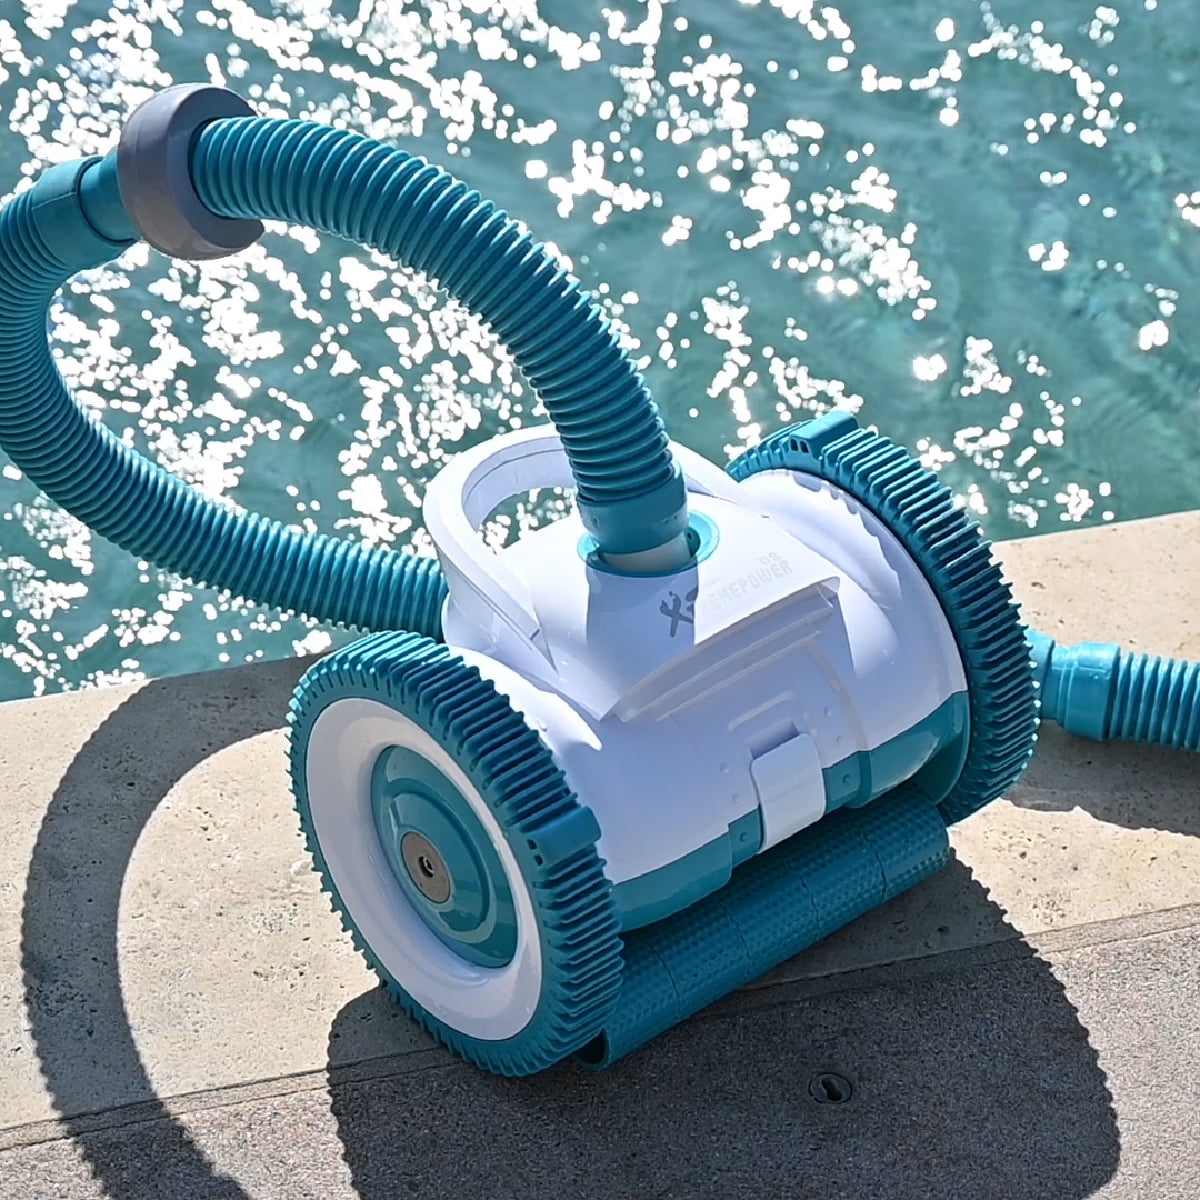 Xtremepower US Kreepy Krauly Automatic Pool Cleaner Suction InGround Vacuum New